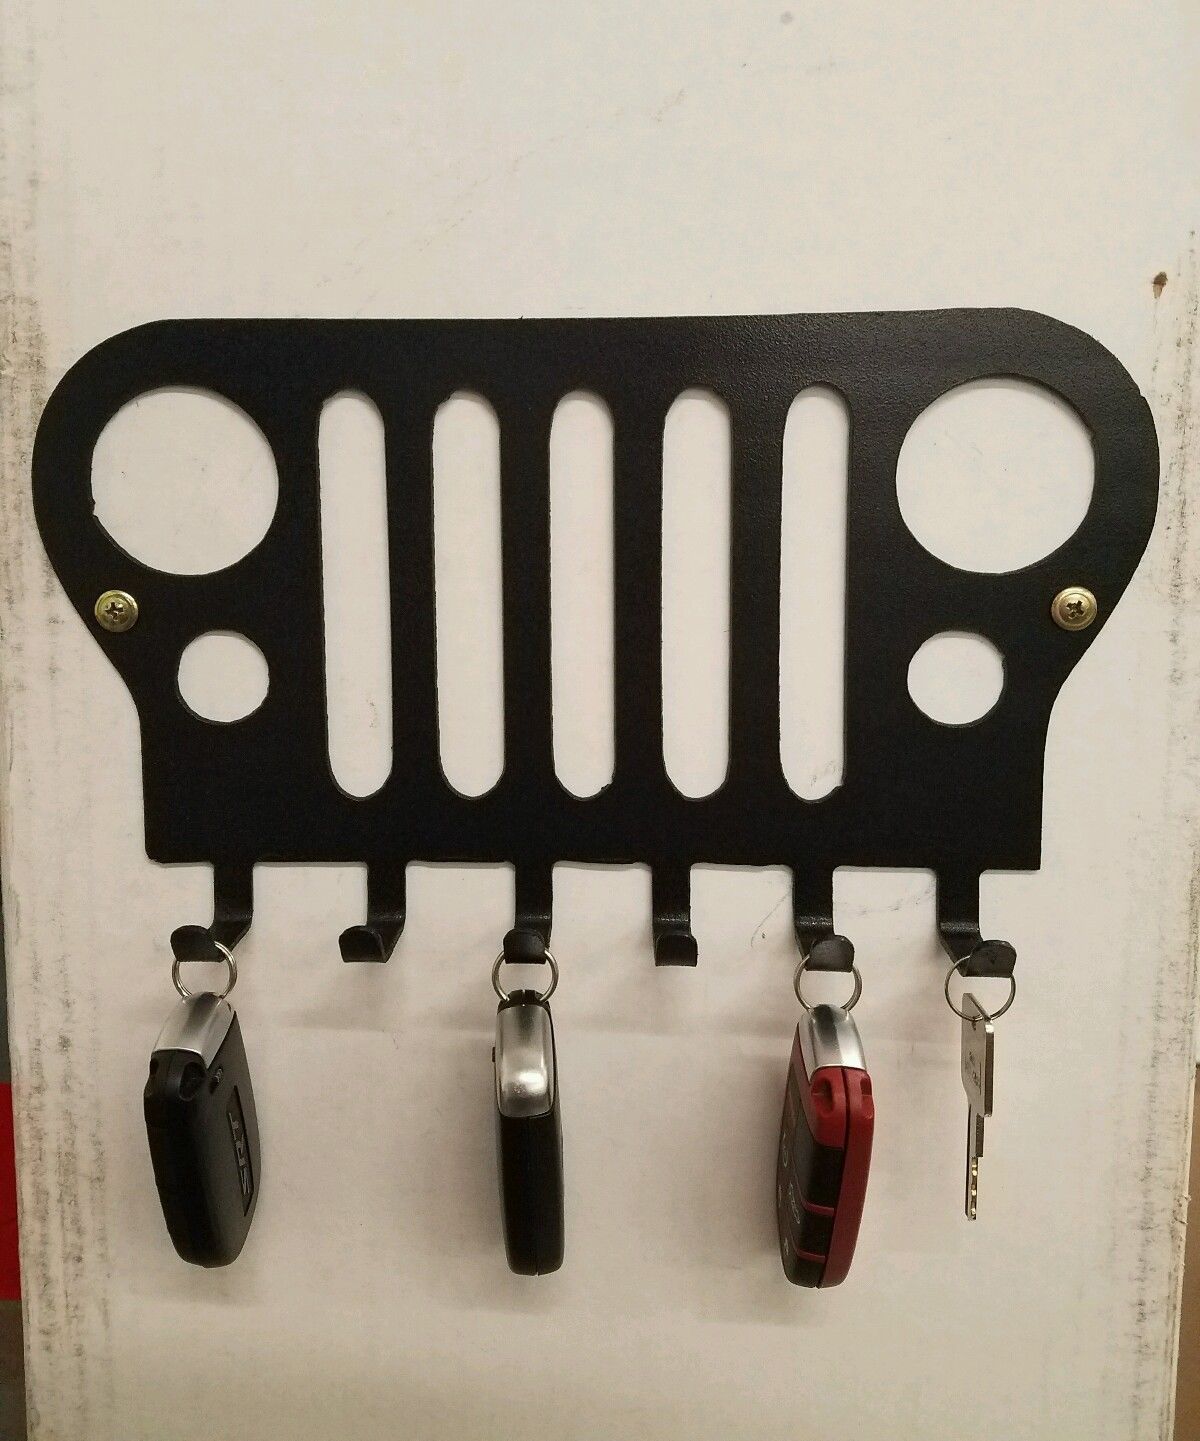 Jeep wrangler grill keychain holder metal art plasma cut fob gift